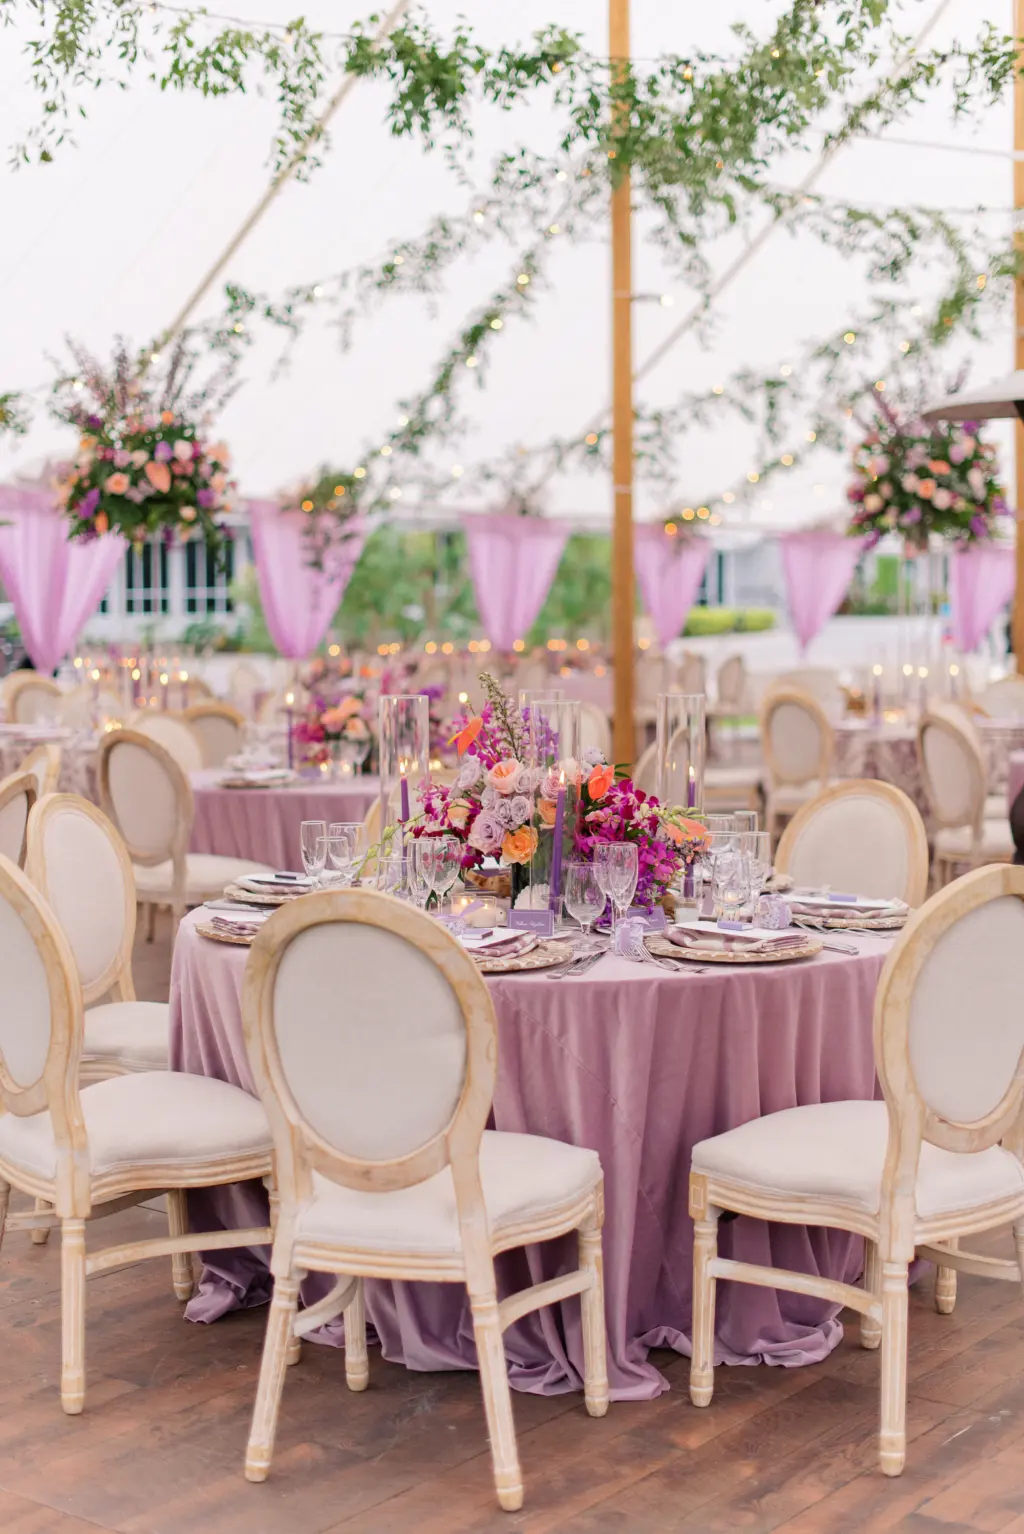 Velvet Purple Table Cloth with Gray Chairs | Tropical Old Florida Wedding Reception | Sarasota Venue The Resort at Longboat Key Club | Florist Botanica Design Studio